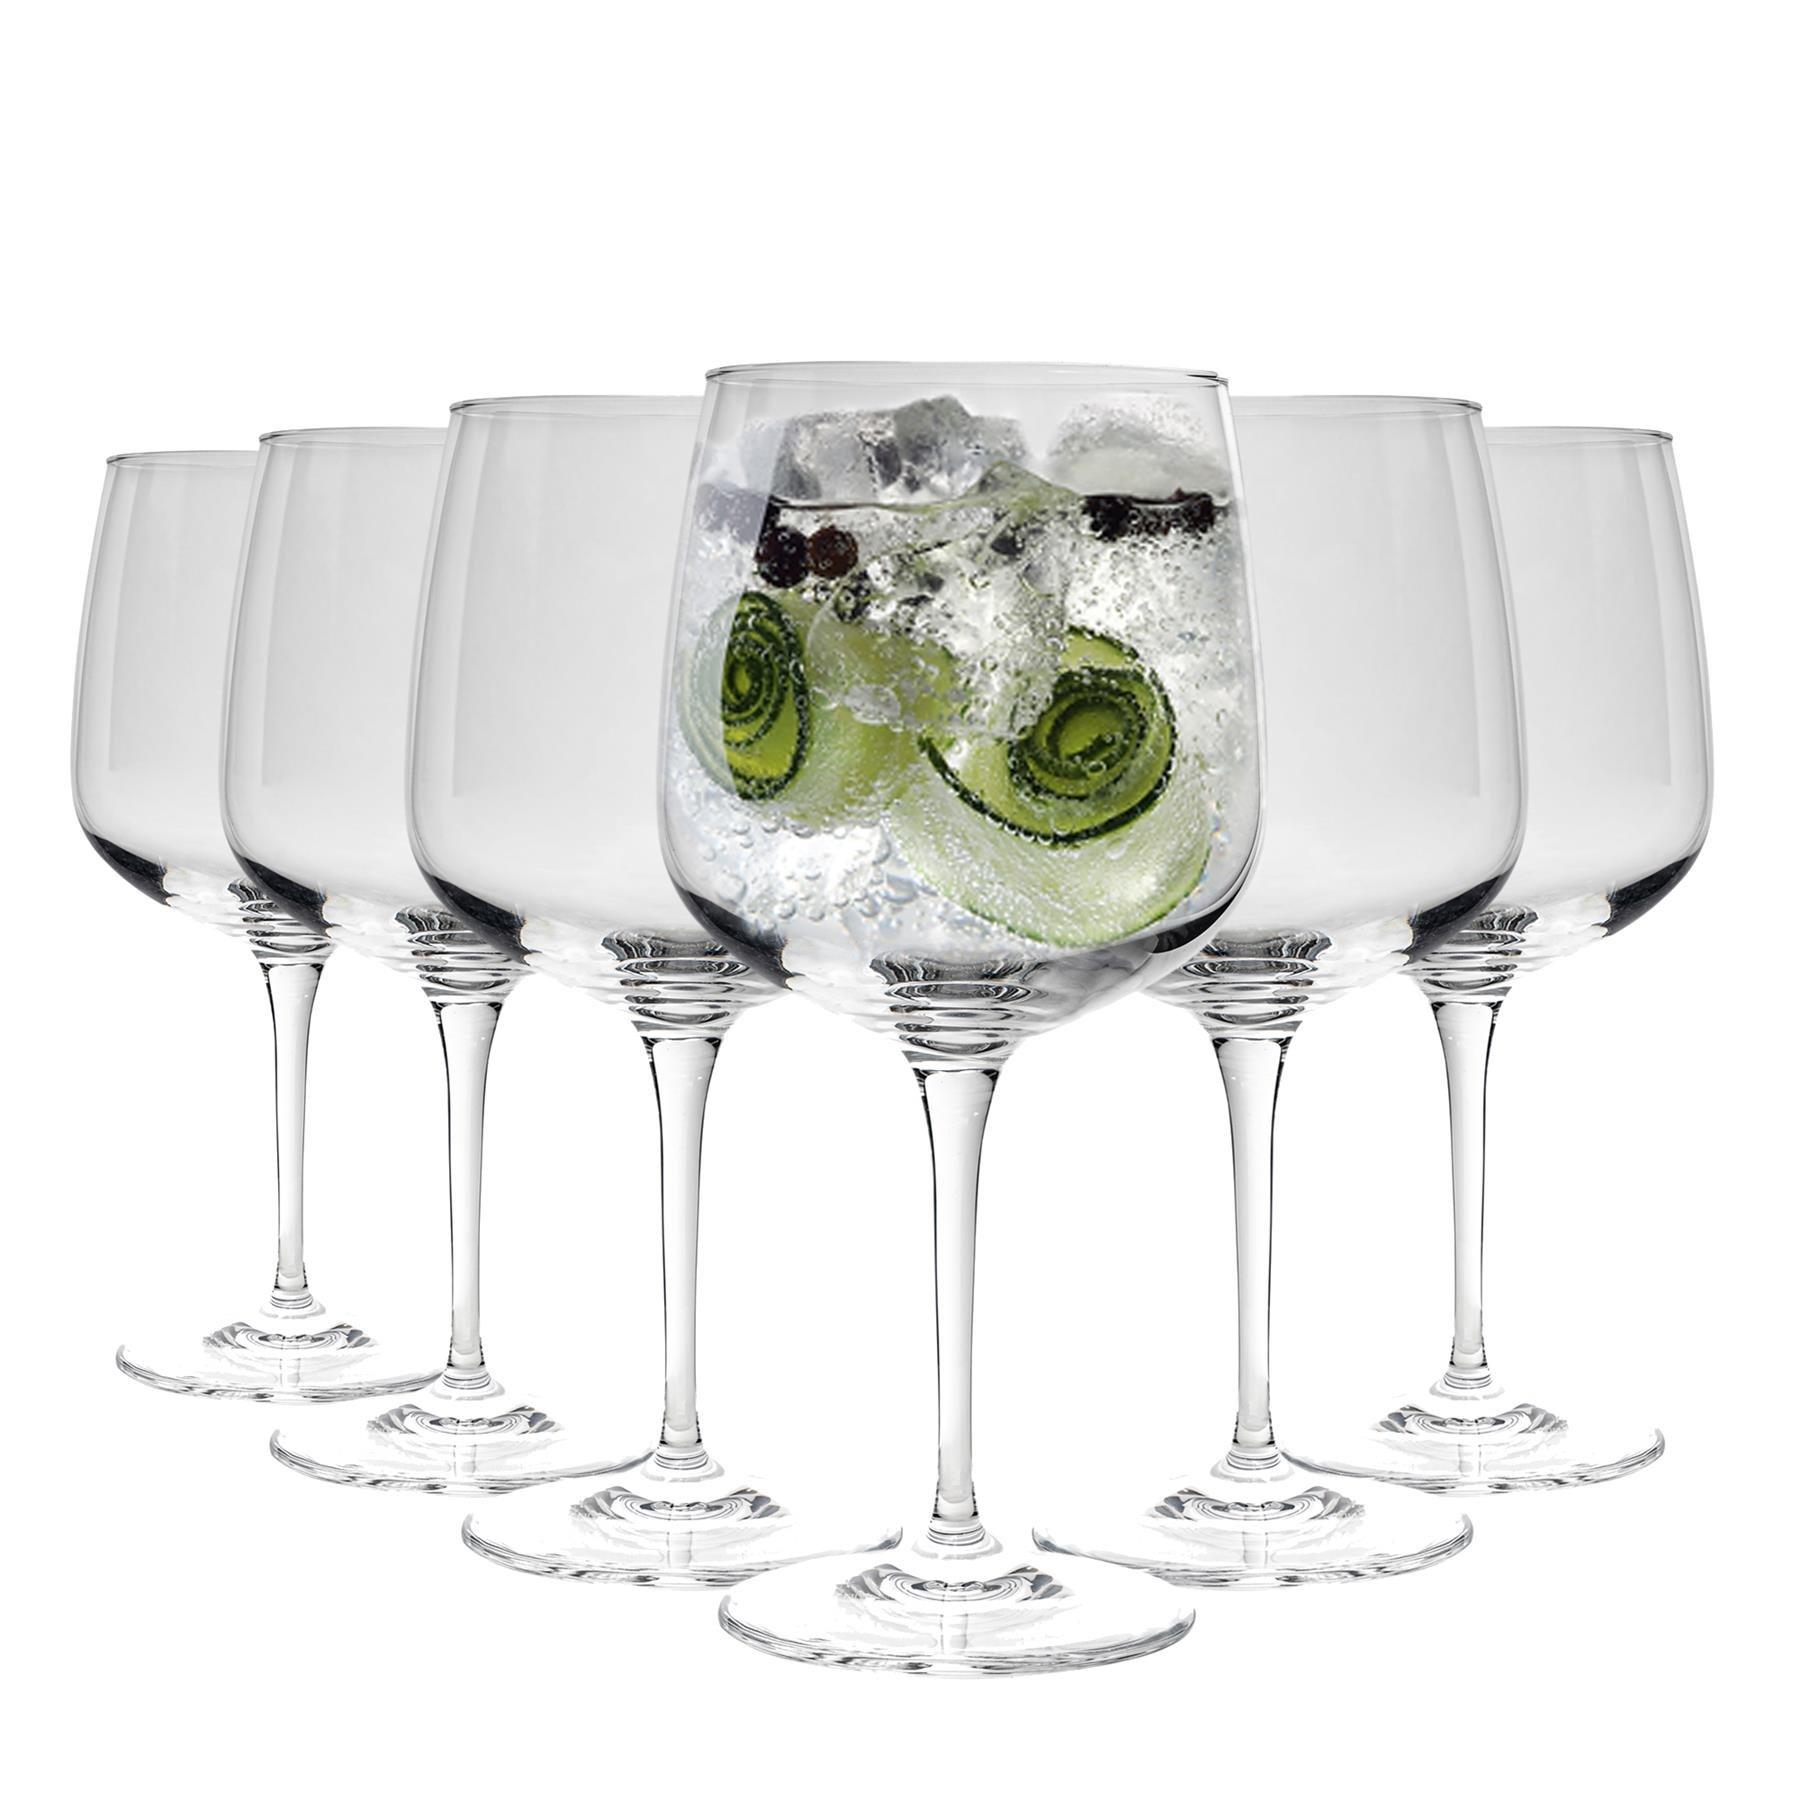 Premium Gin Glasses - 755ml - Pack of 12